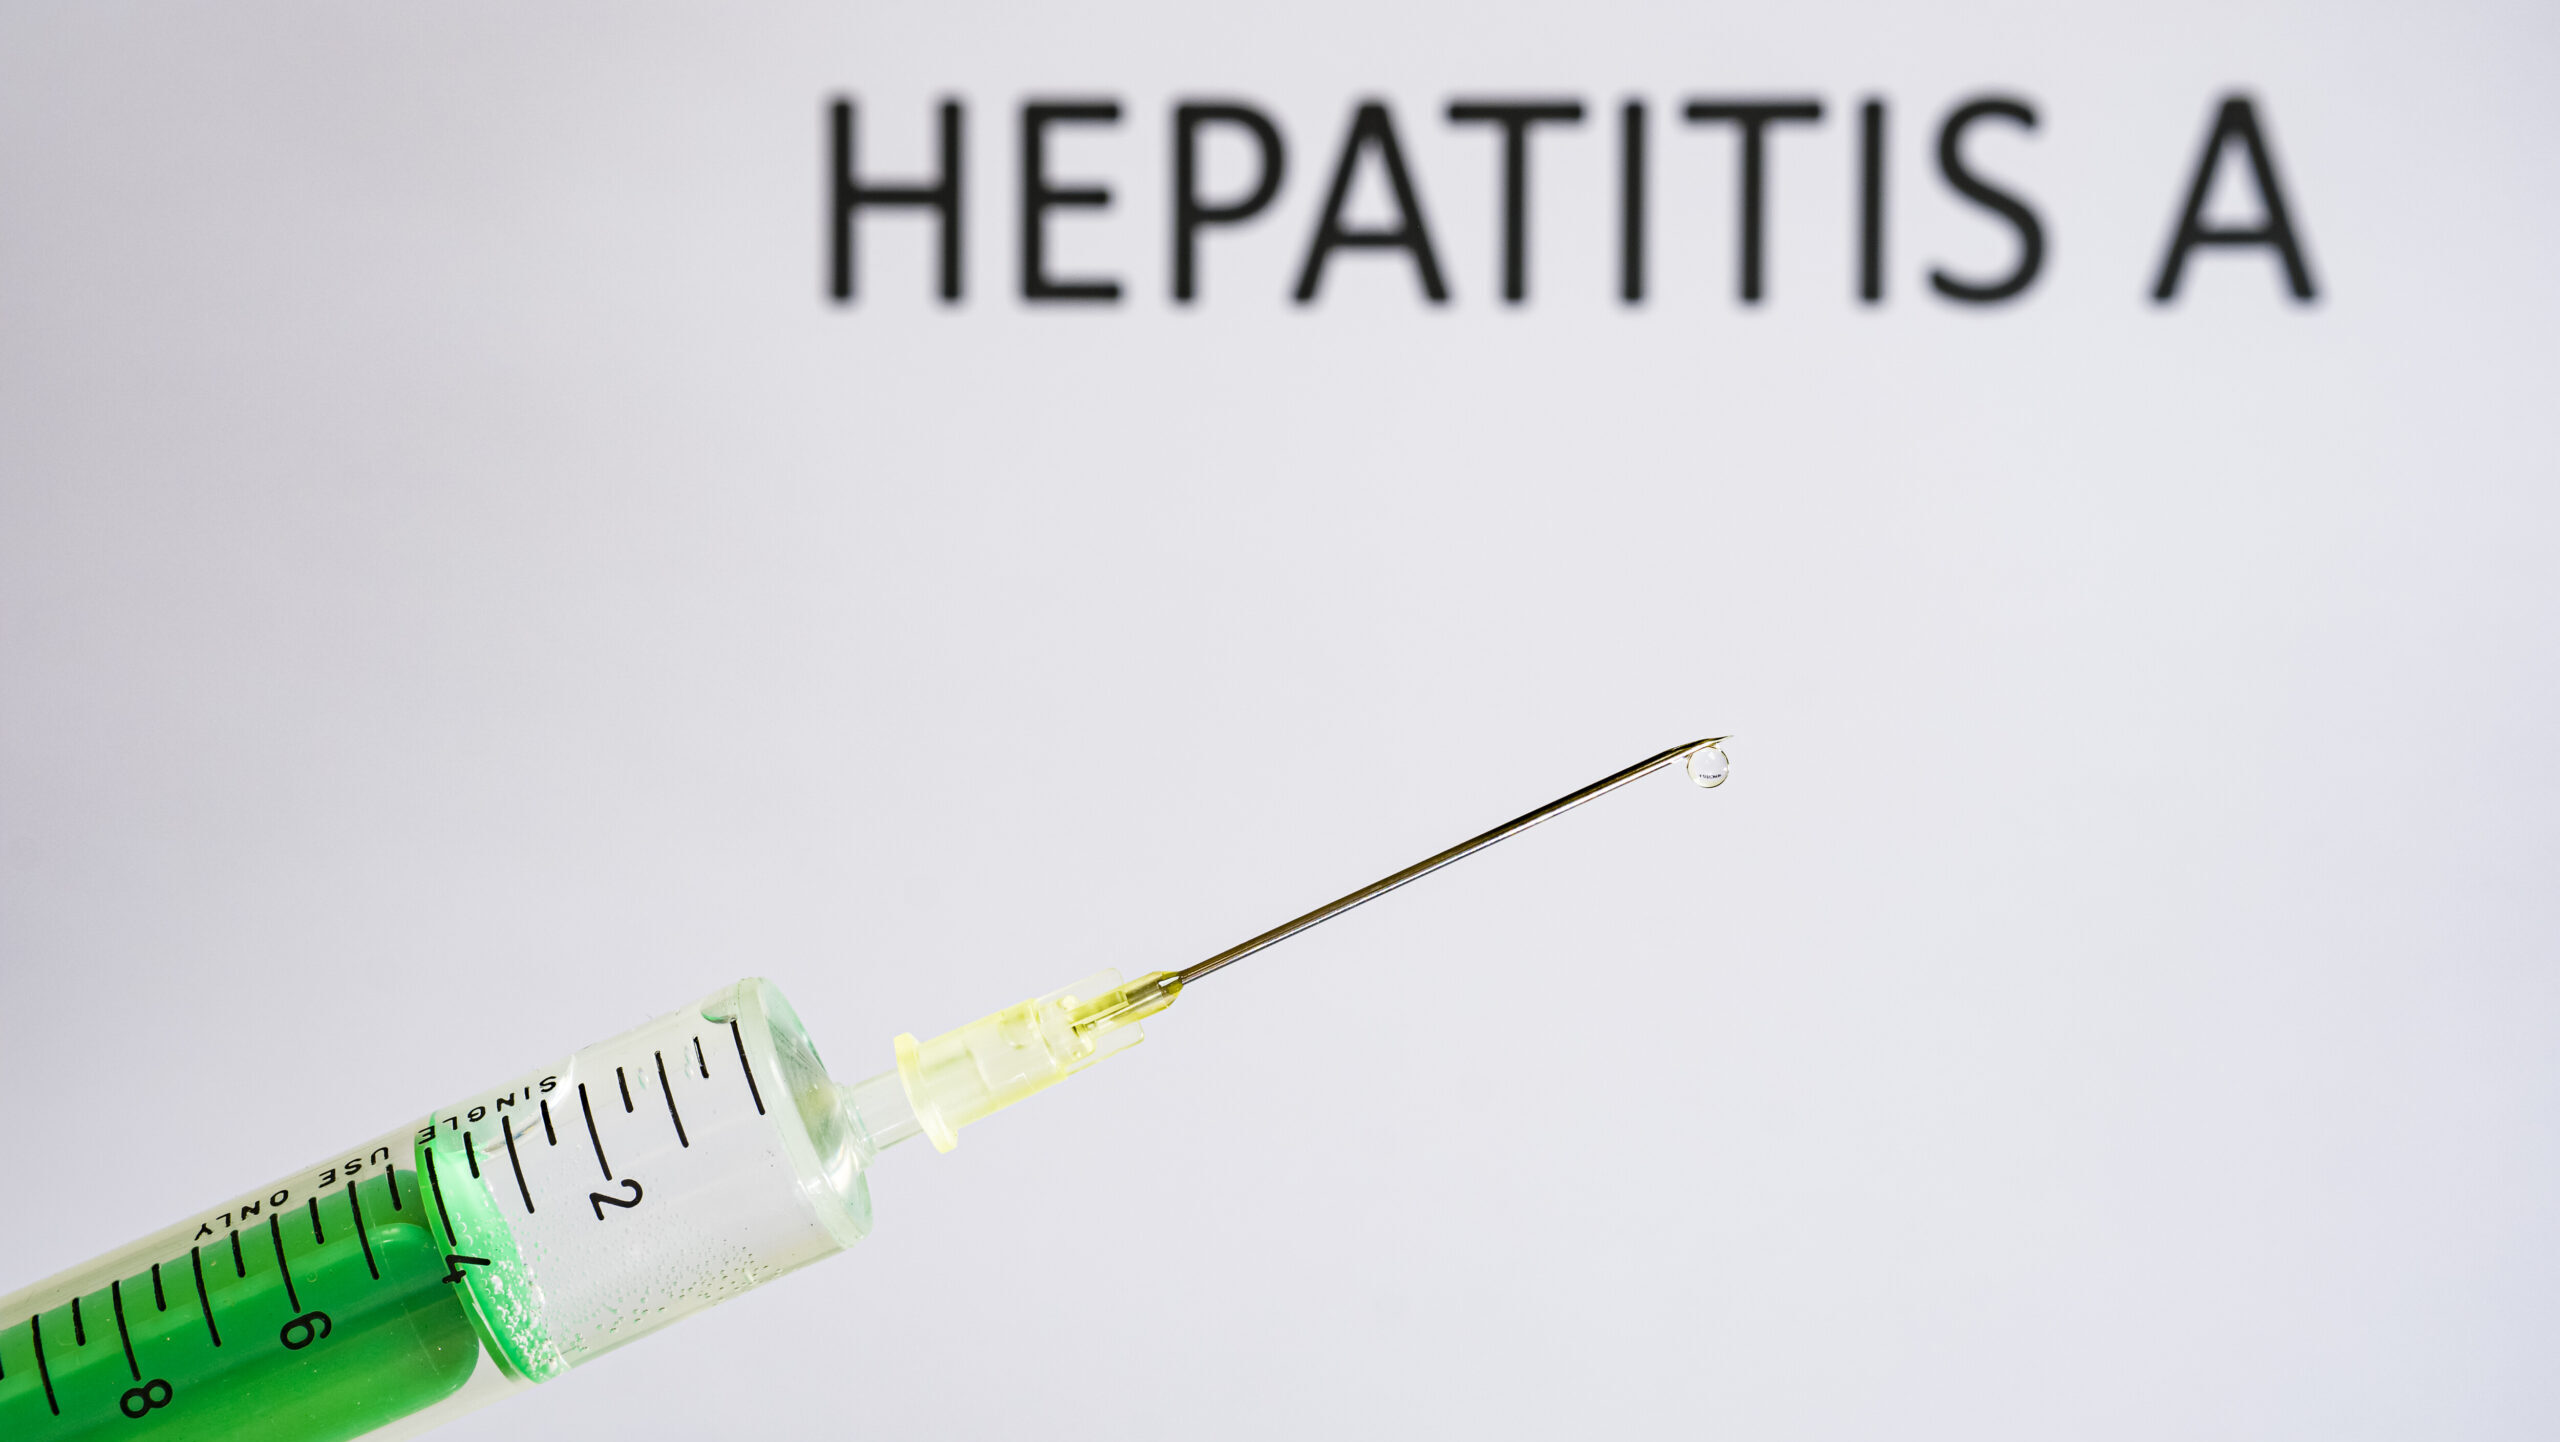 Erdoğan Announces Turkey’s Entry Into Hepatitis A Vaccine Production